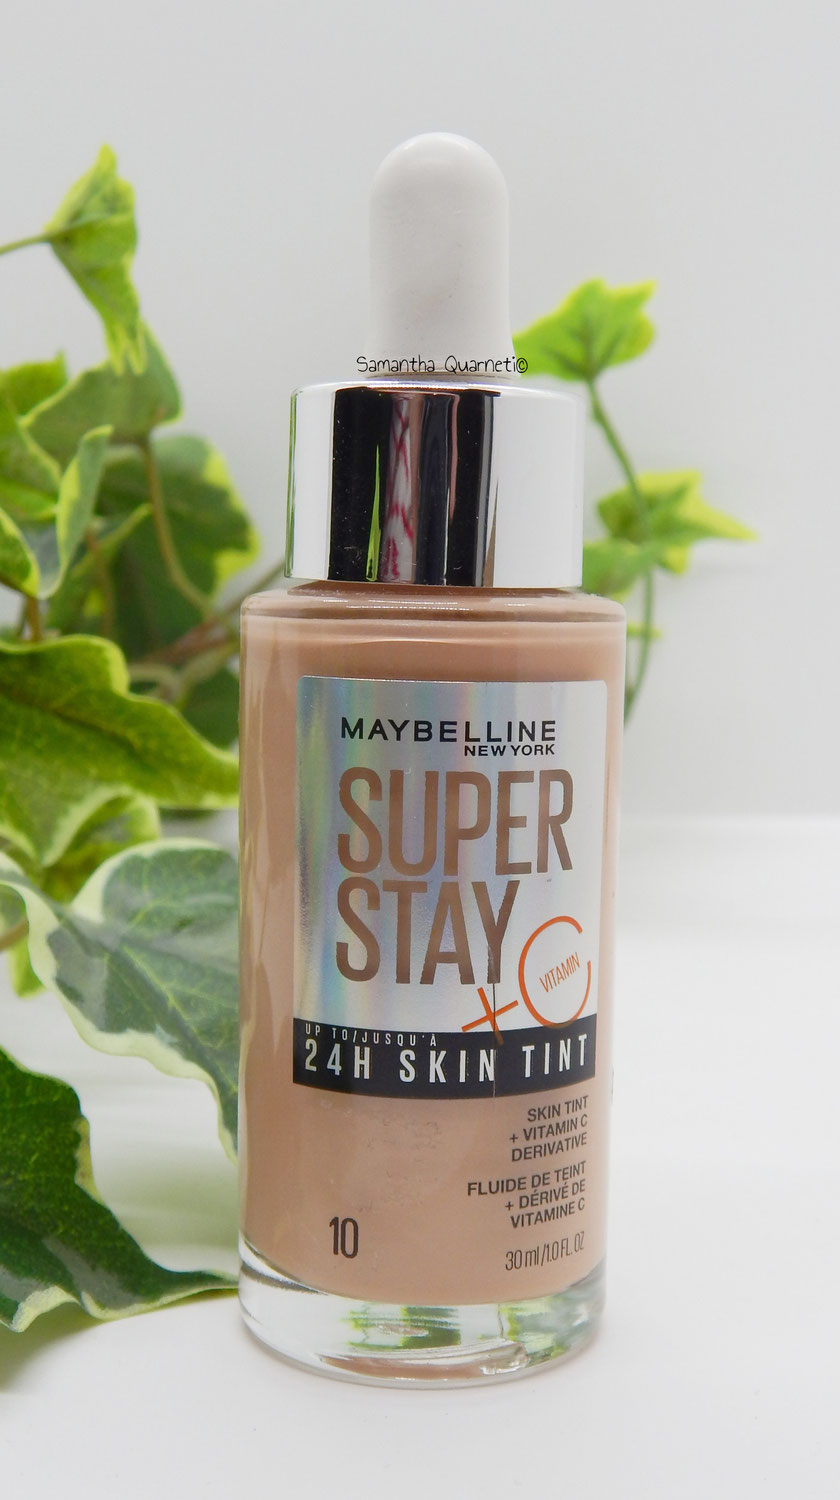 Maybelline Super Stay Fondotinta Skin Tint - Recensione